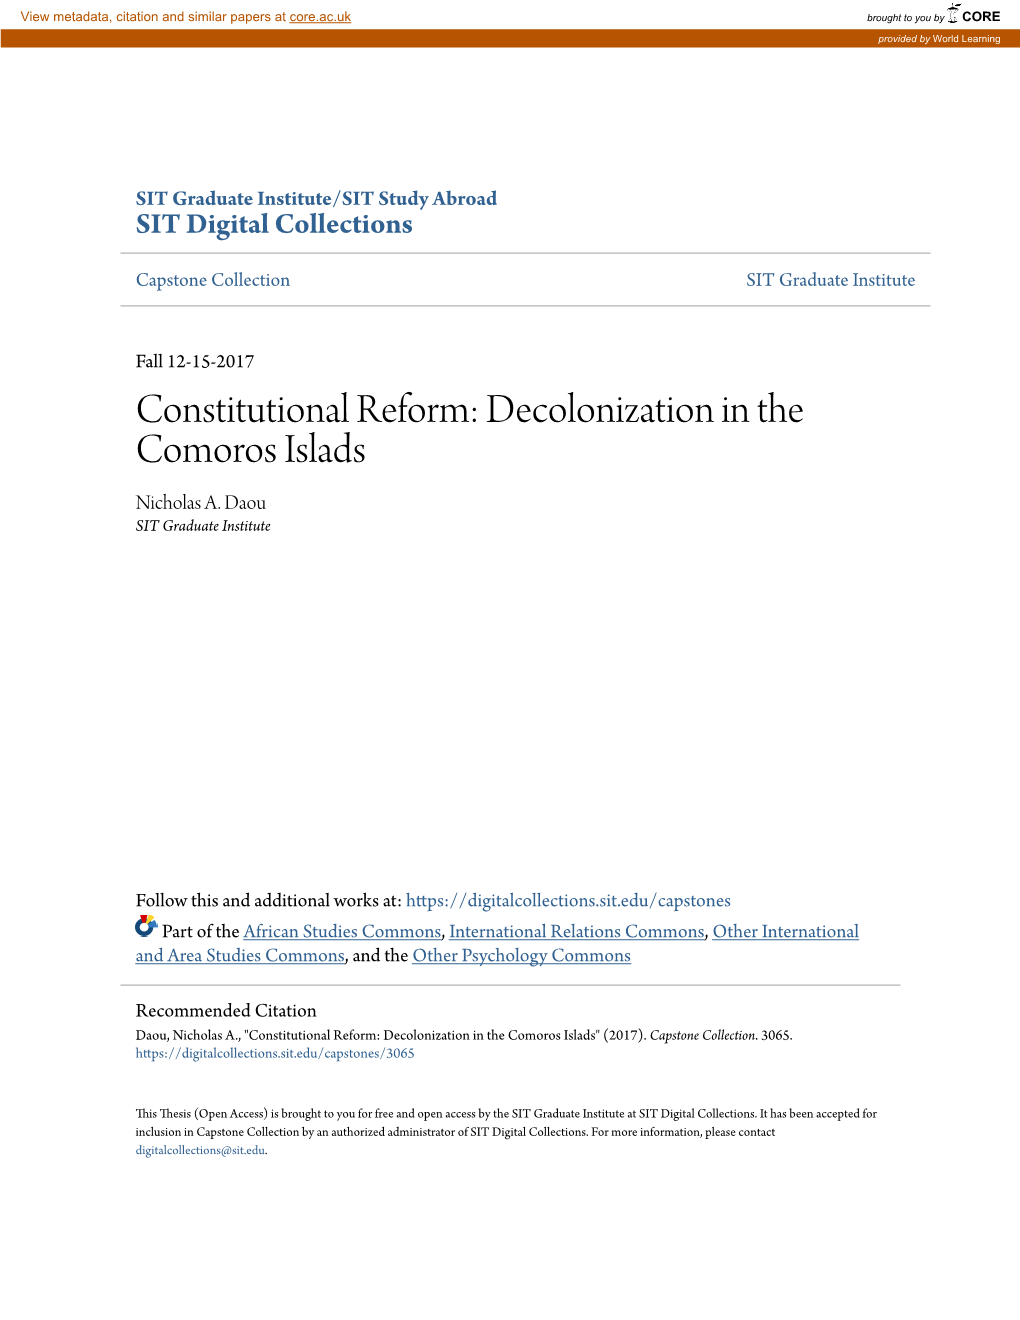 Constitutional Reform: Decolonization in the Comoros Islads Nicholas A